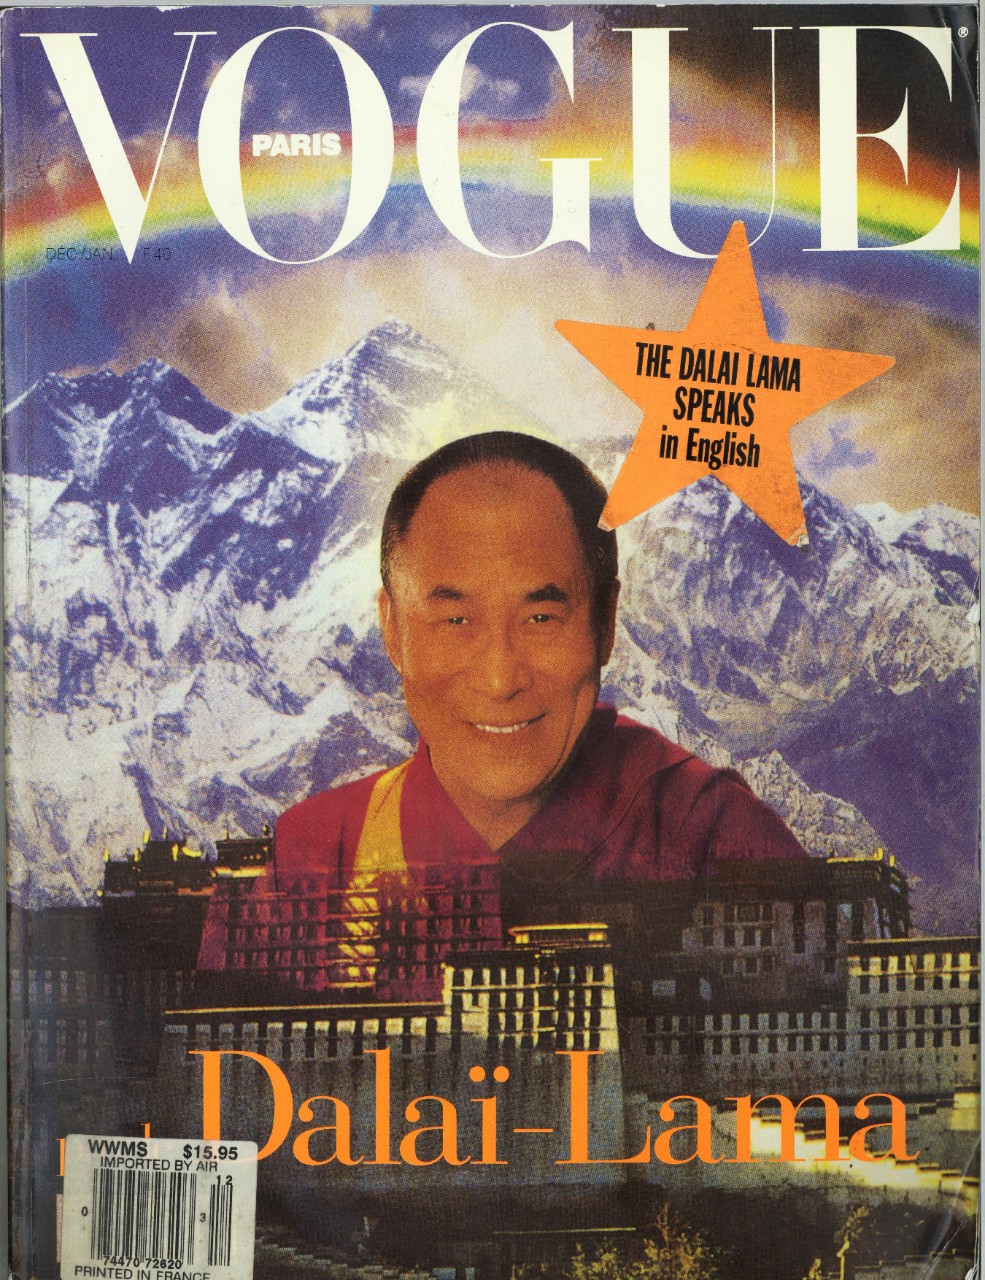 Dalai Lama on the cover of Vogue Magazine